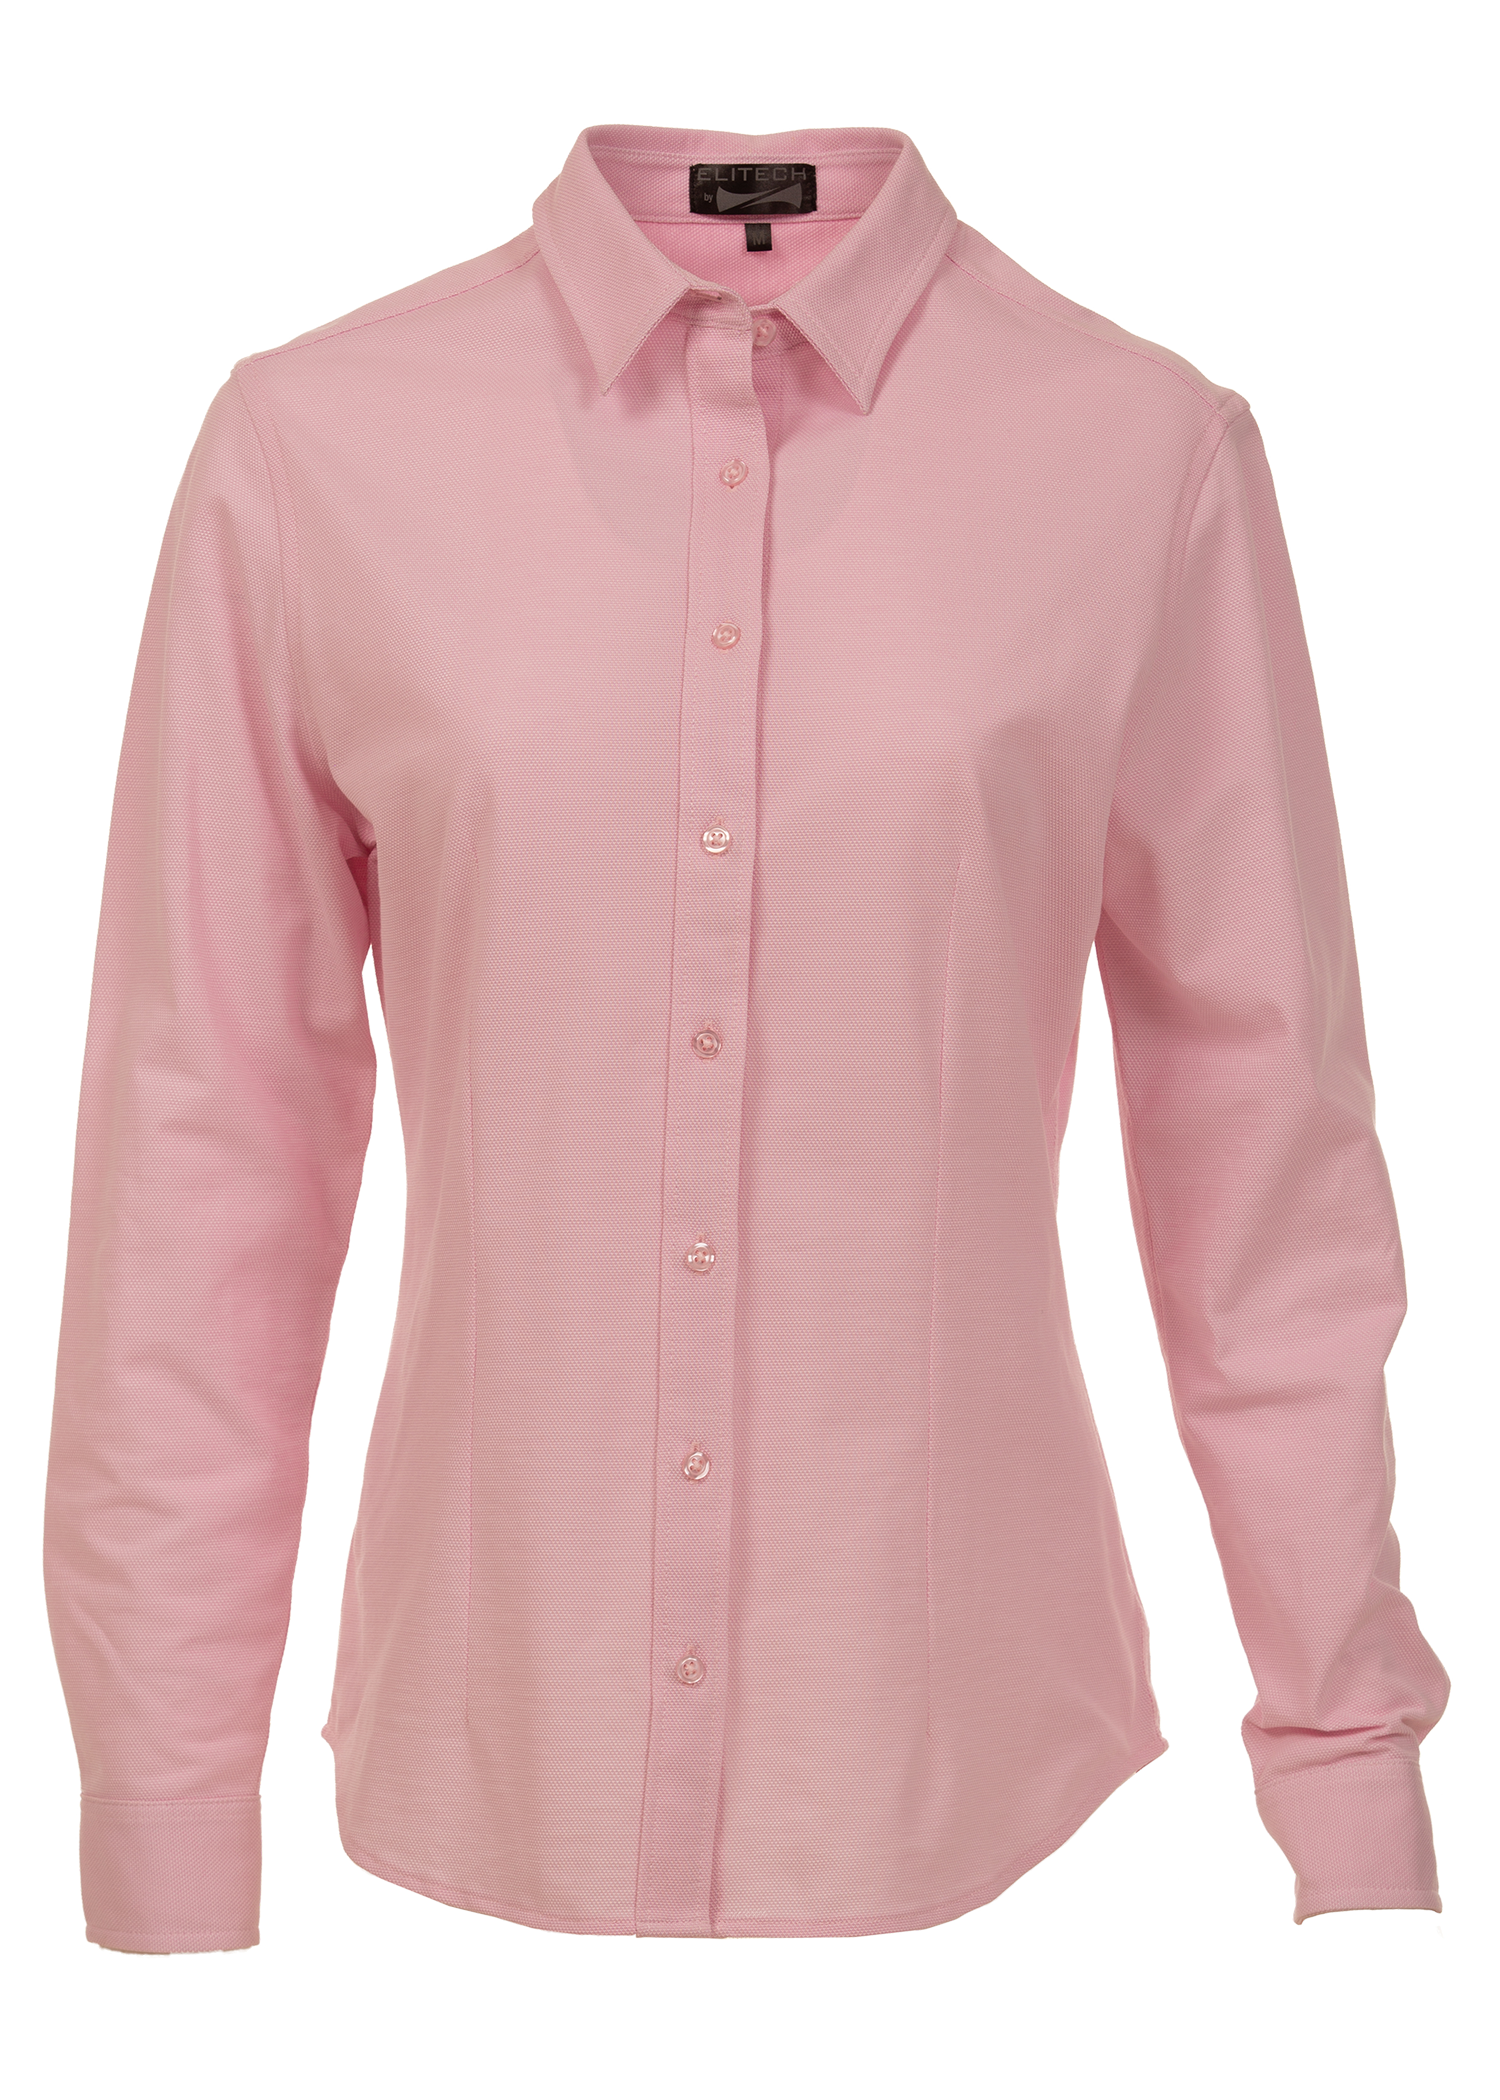 Zorrel Z7051 - Ladies Long Sleeve Knit Shirt